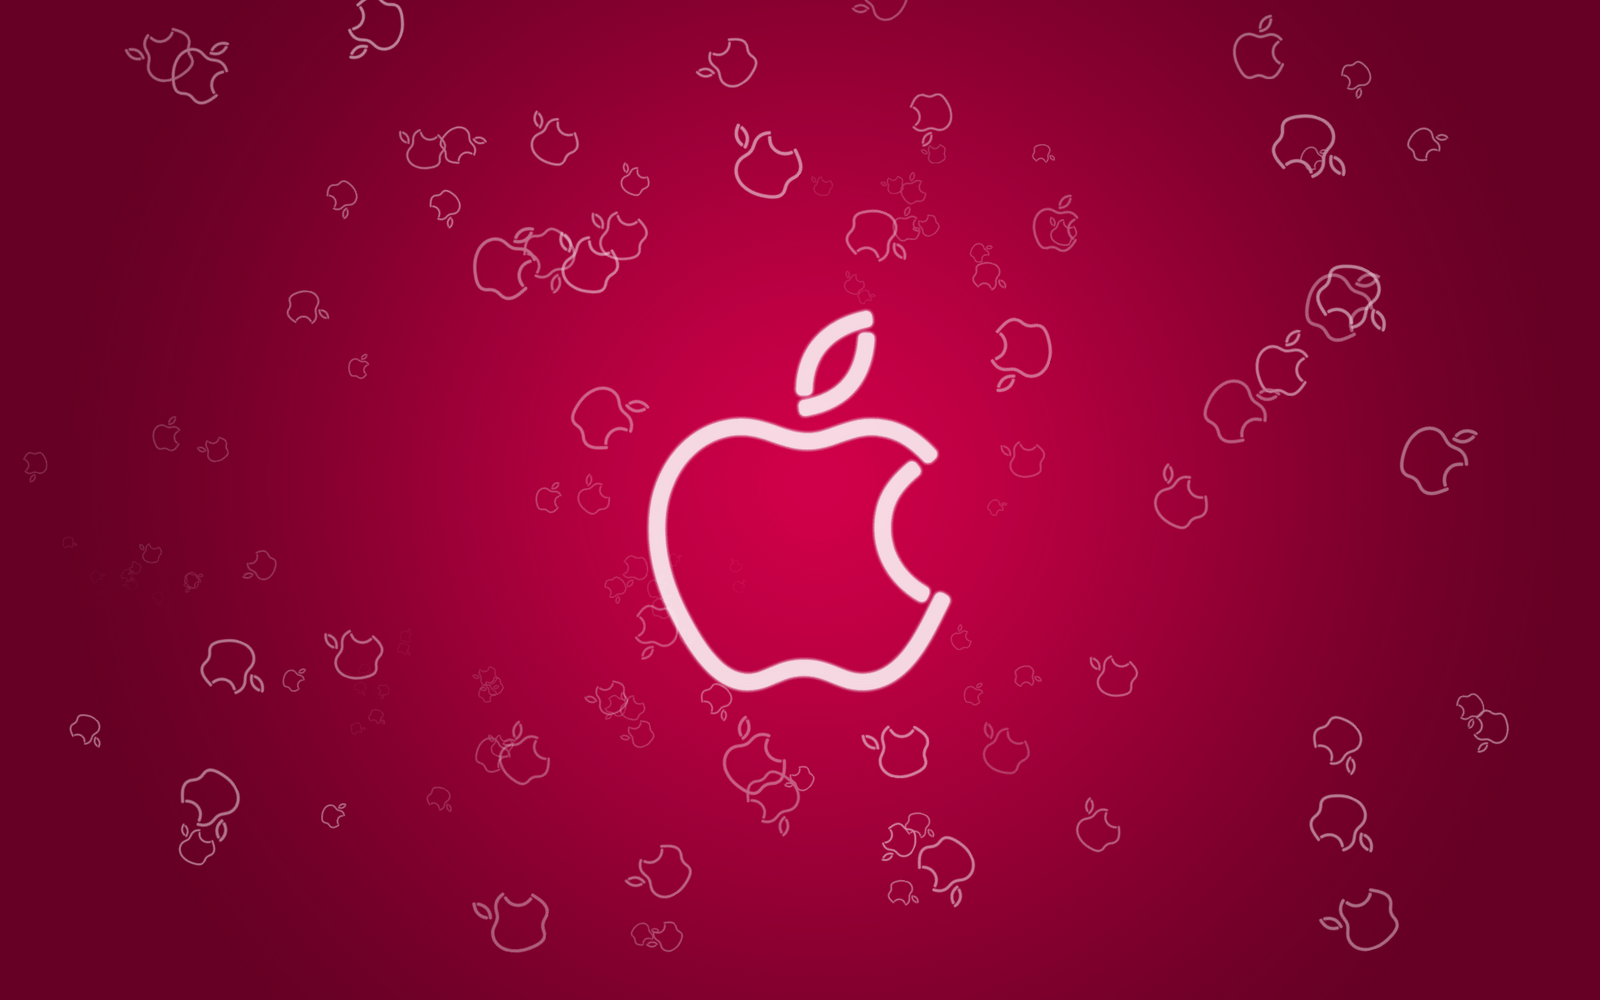 Wallpaper For > Red Apple Logo Wallpaper HD